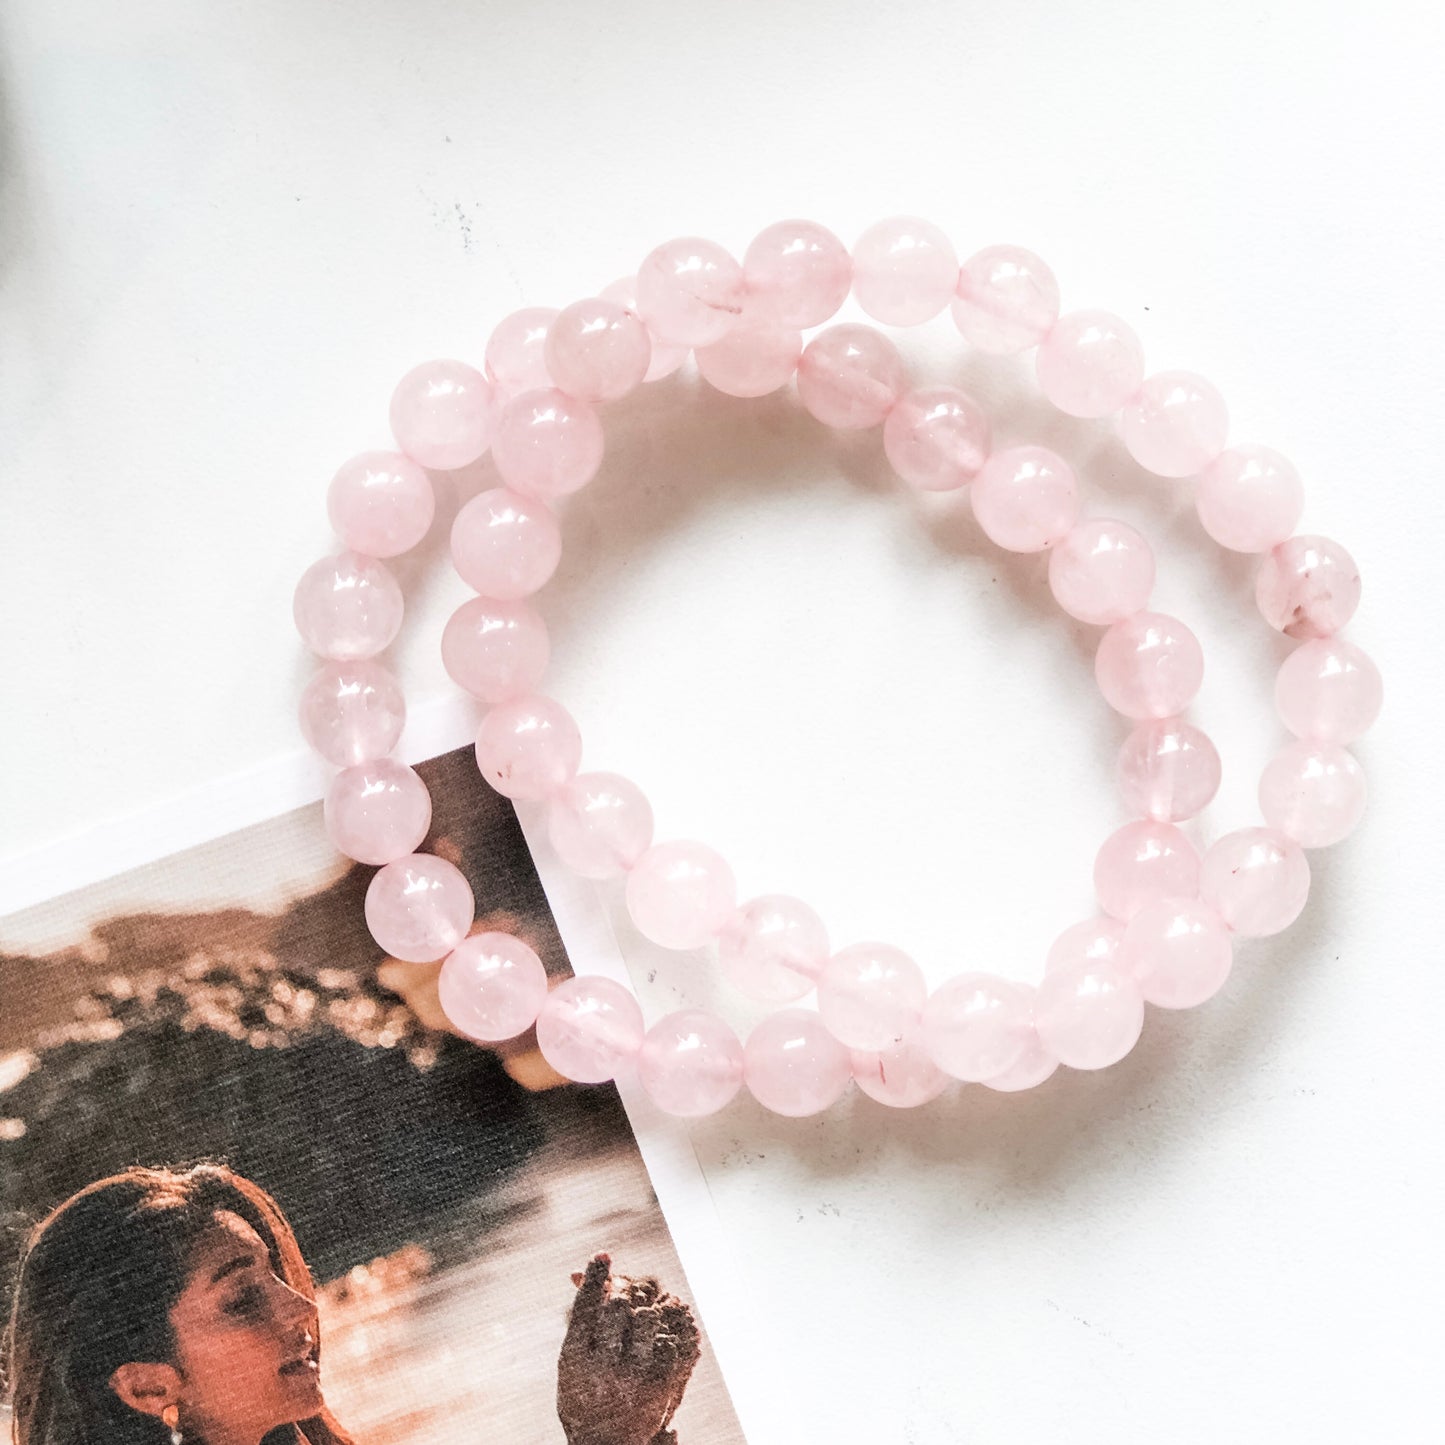 Crystal Beads Bracelet - Rose Quartz